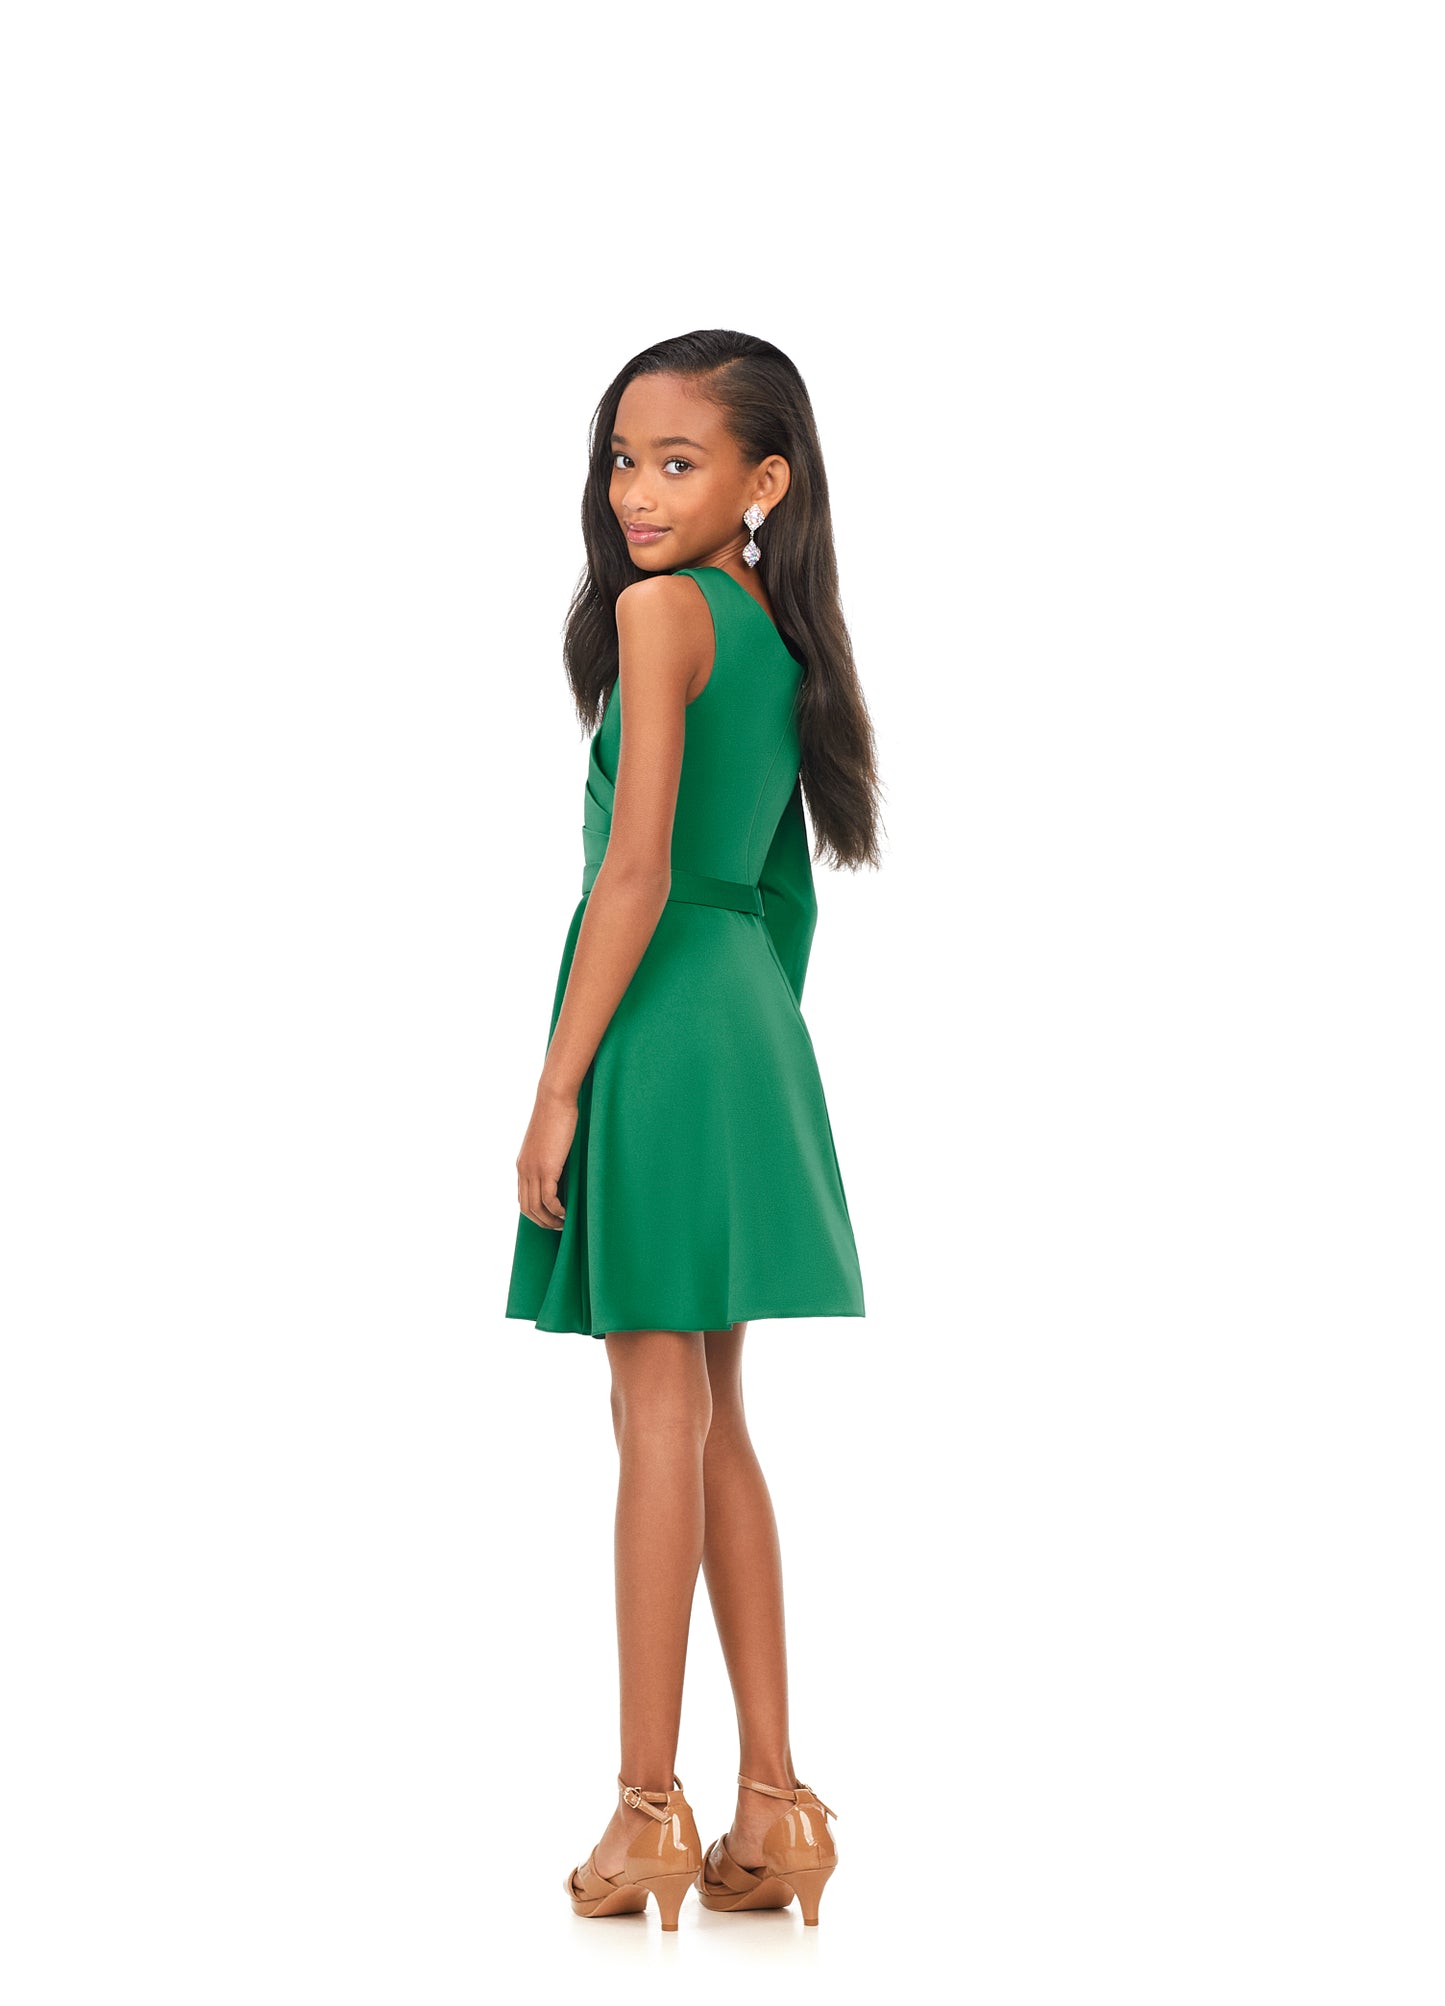 Ashley Lauren Kids 8171 Emerald Green Girls One Sleeve Crepe Cocktail Dress